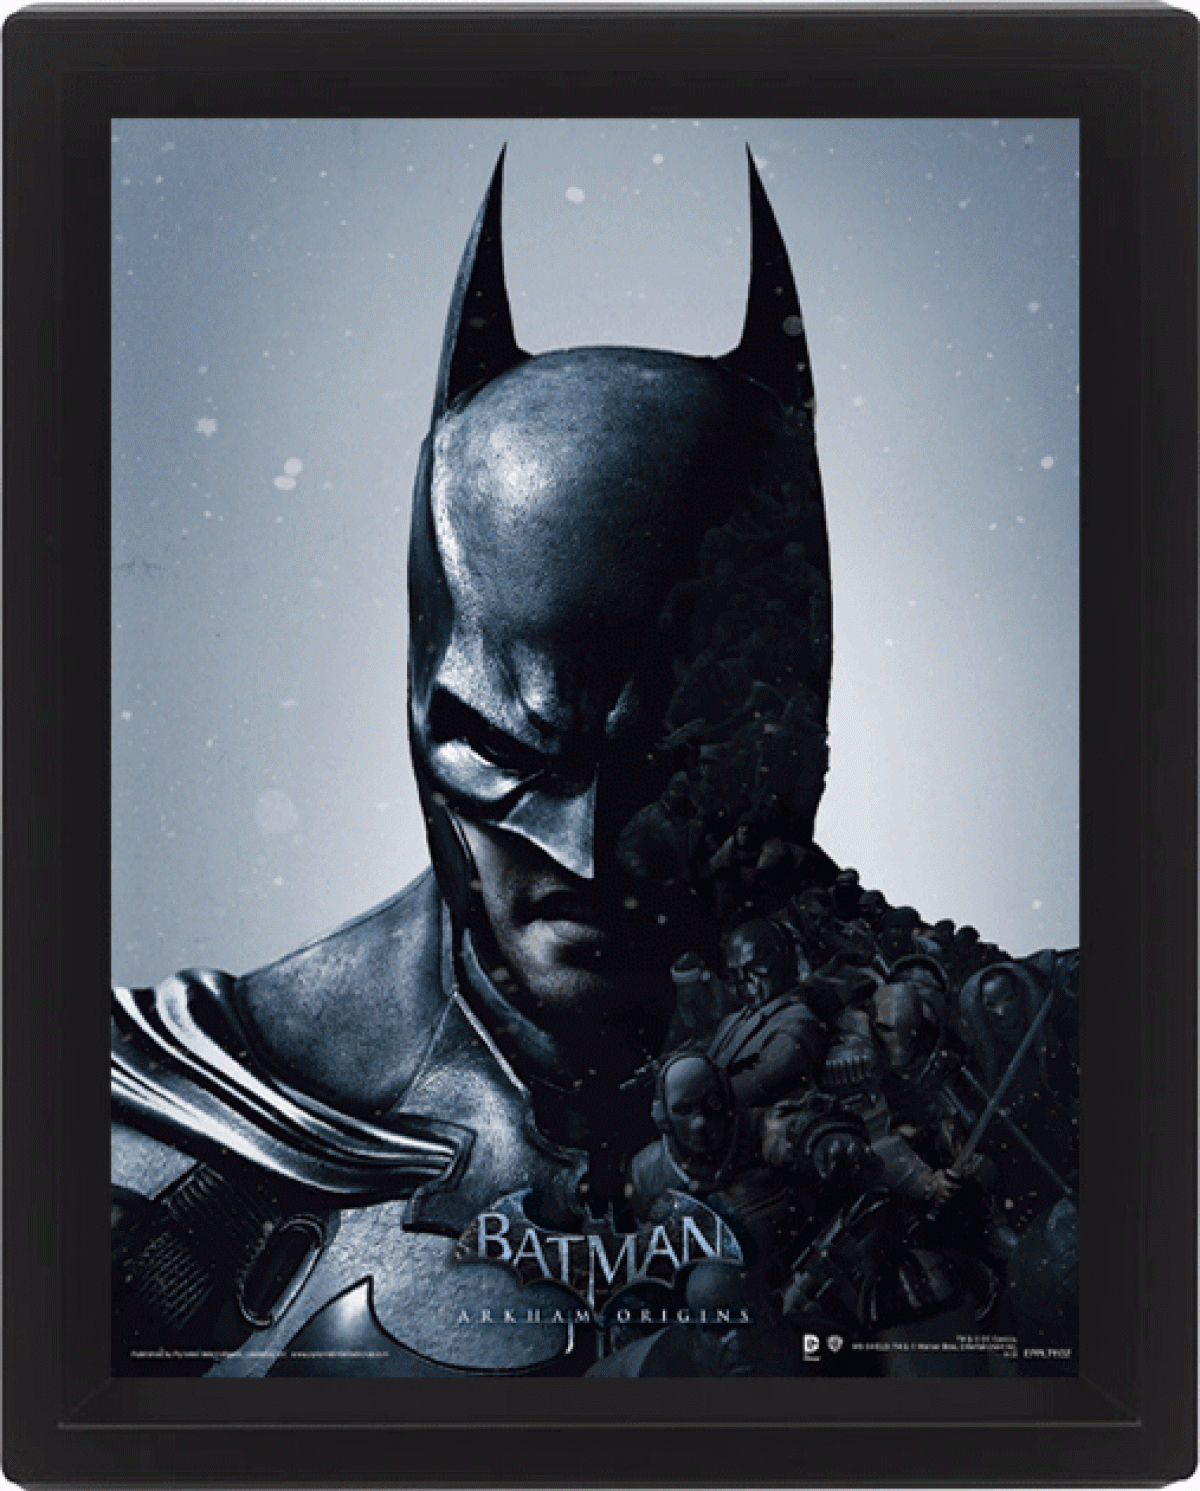 BATMAN Arkham Origins Poster effet 3D encadr Batman Joker 26 x 20 cm